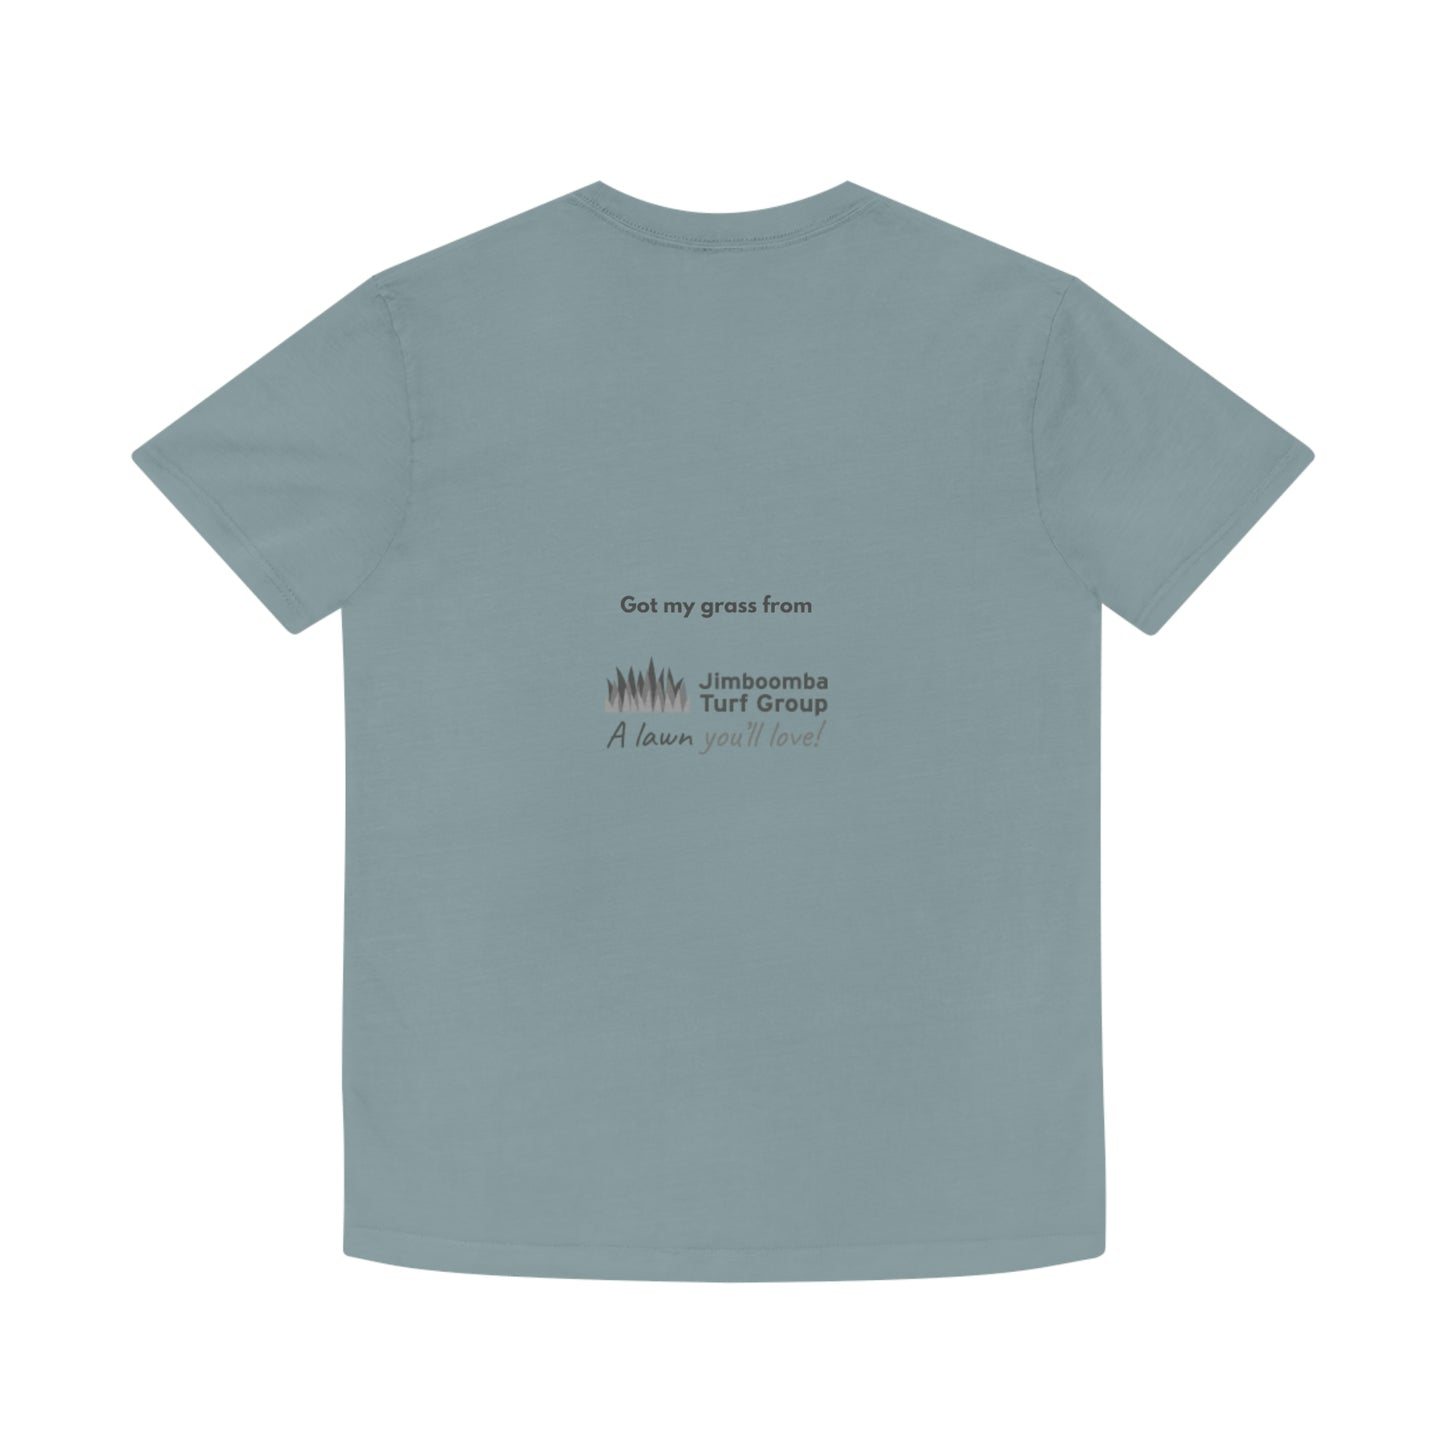 Unisex Faded Shirt - I like straight lines